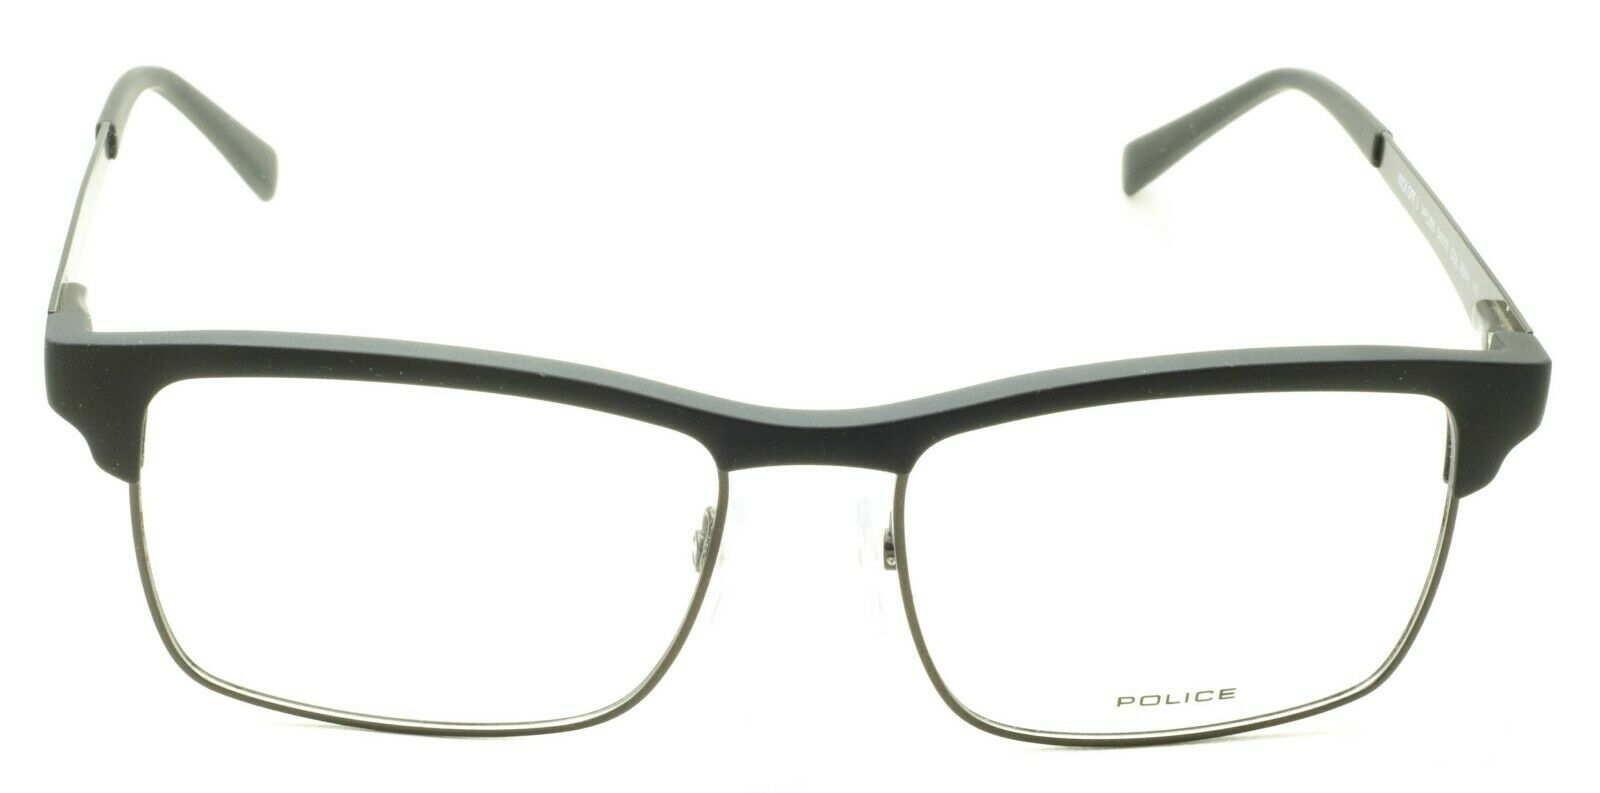 POLICE VPL260 06AA KICK OFF 3 54mm Eyewear FRAMES Glasses RX Optical Eyeglasses